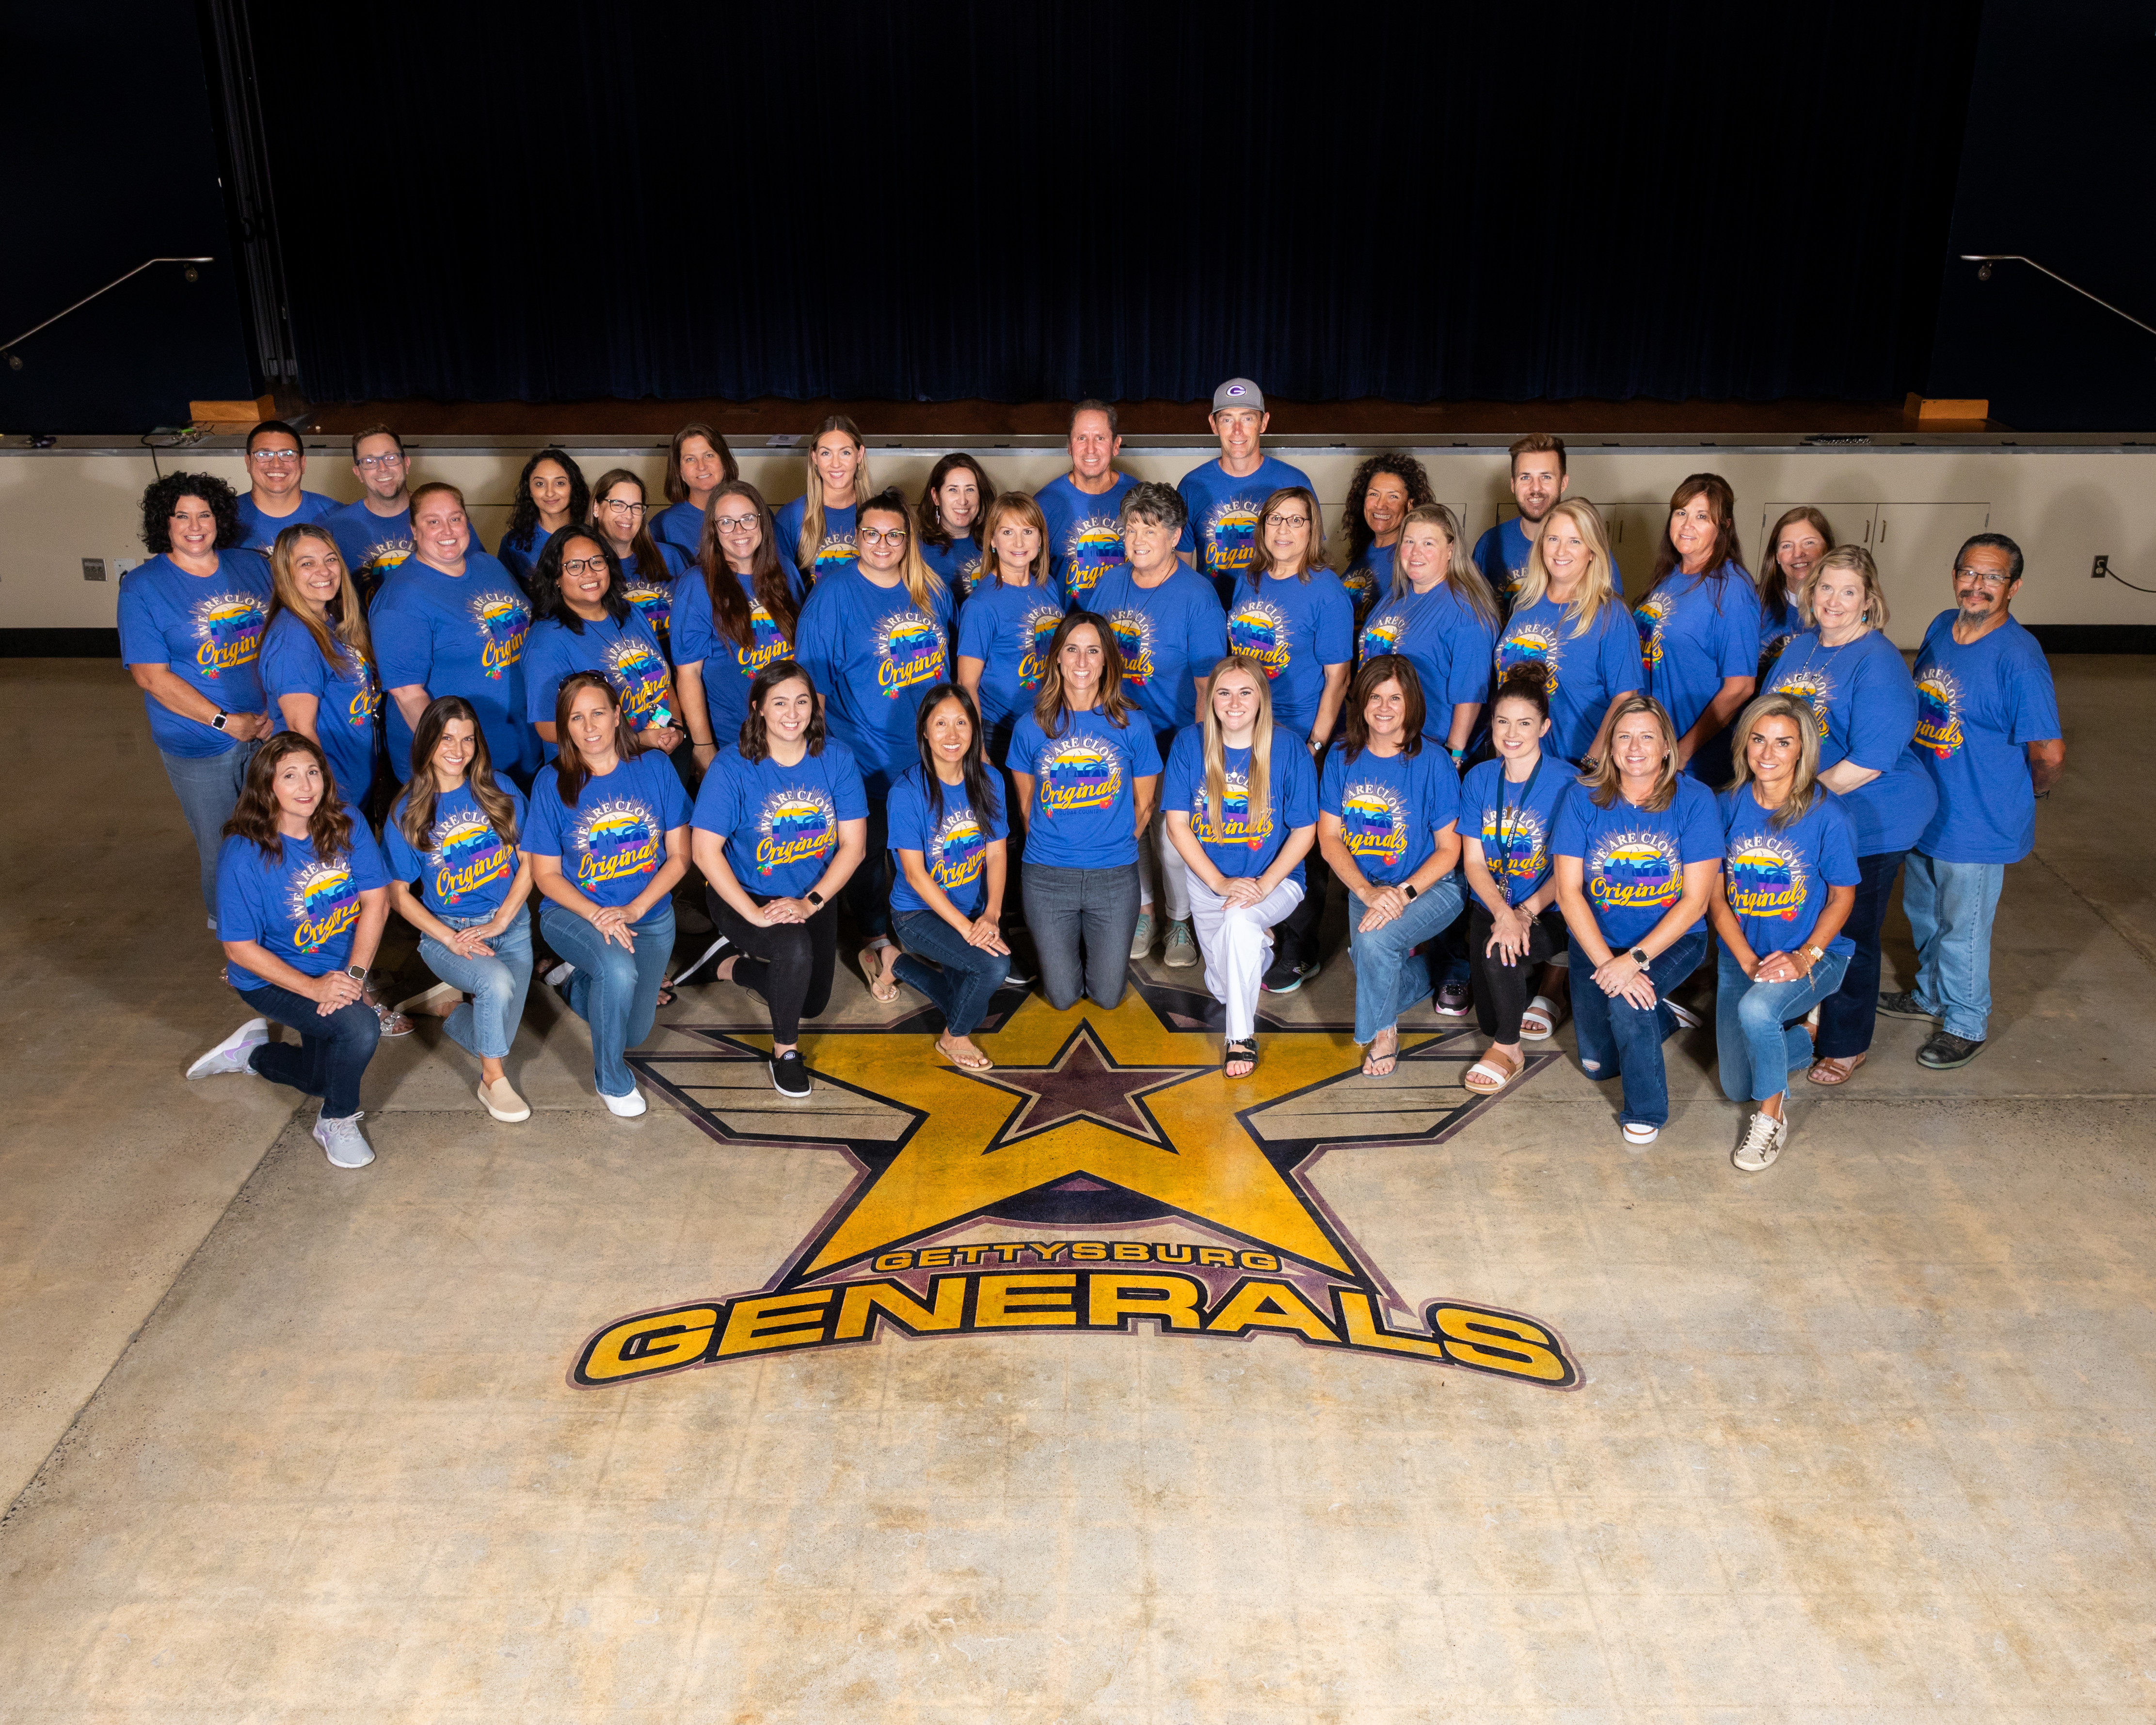 Gettysburg Staff wearing Blue CHS shirts on MPR floor with Generals emblem